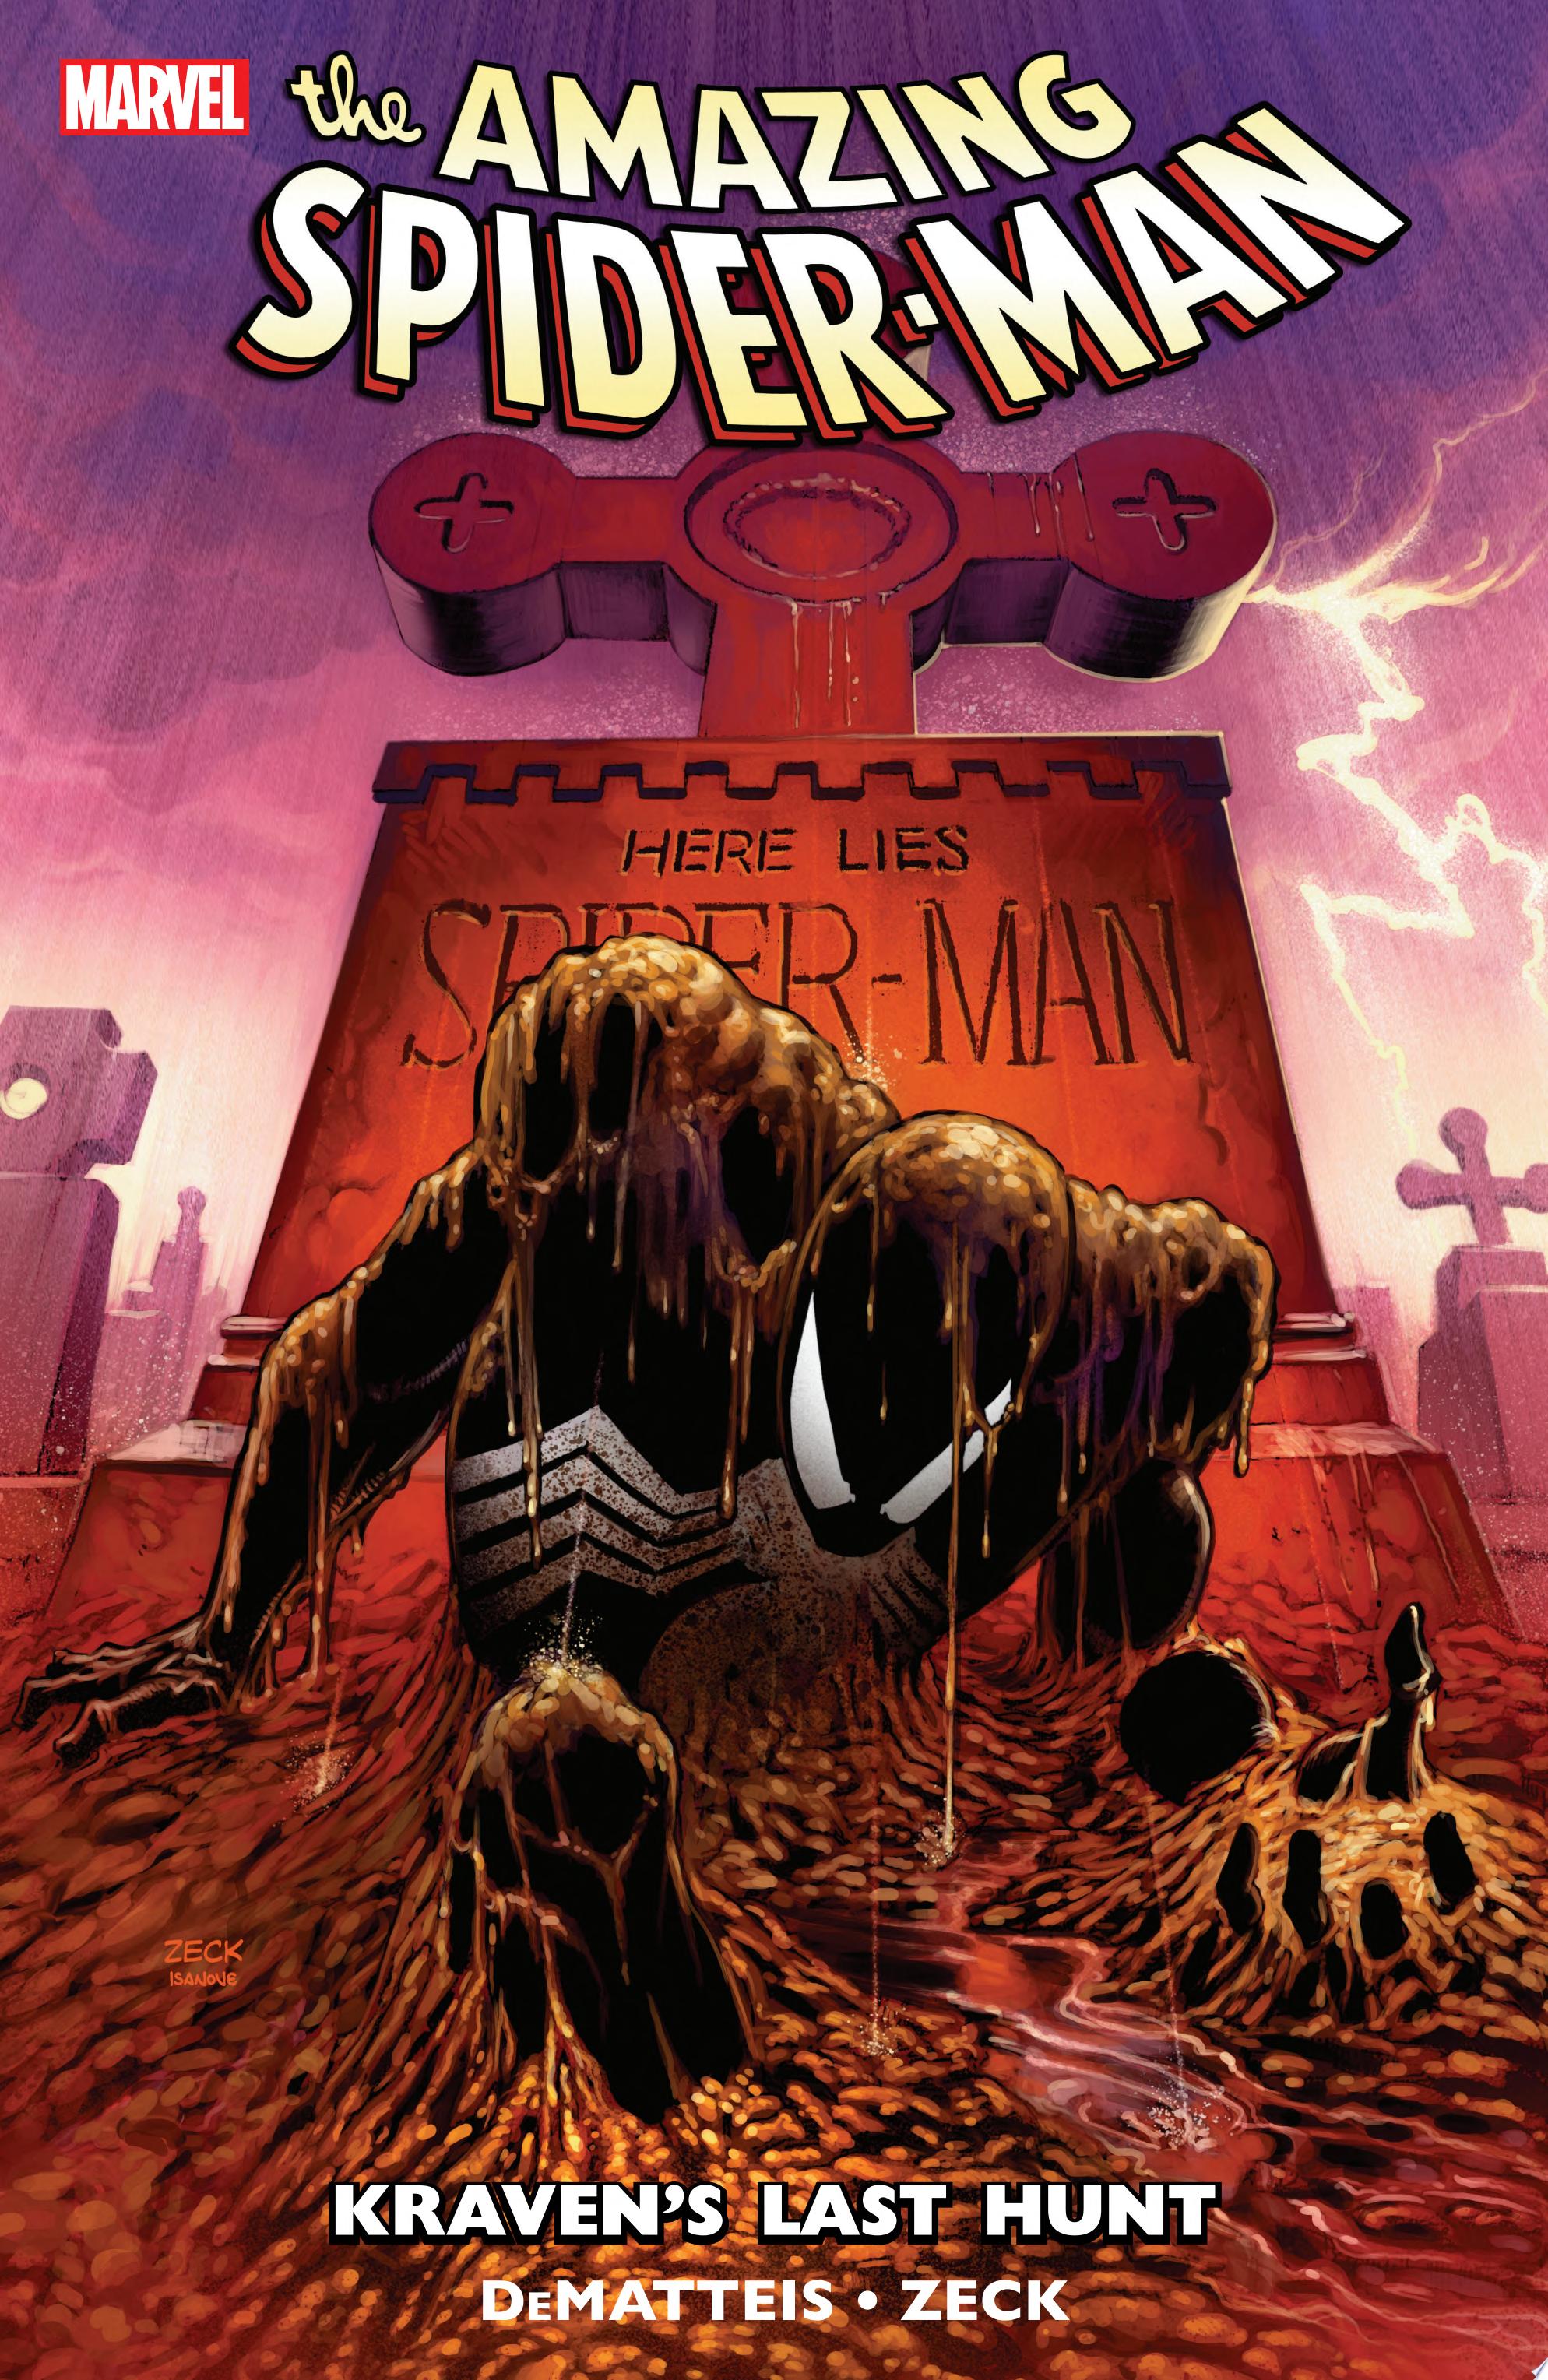 Image for "Spider-Man"